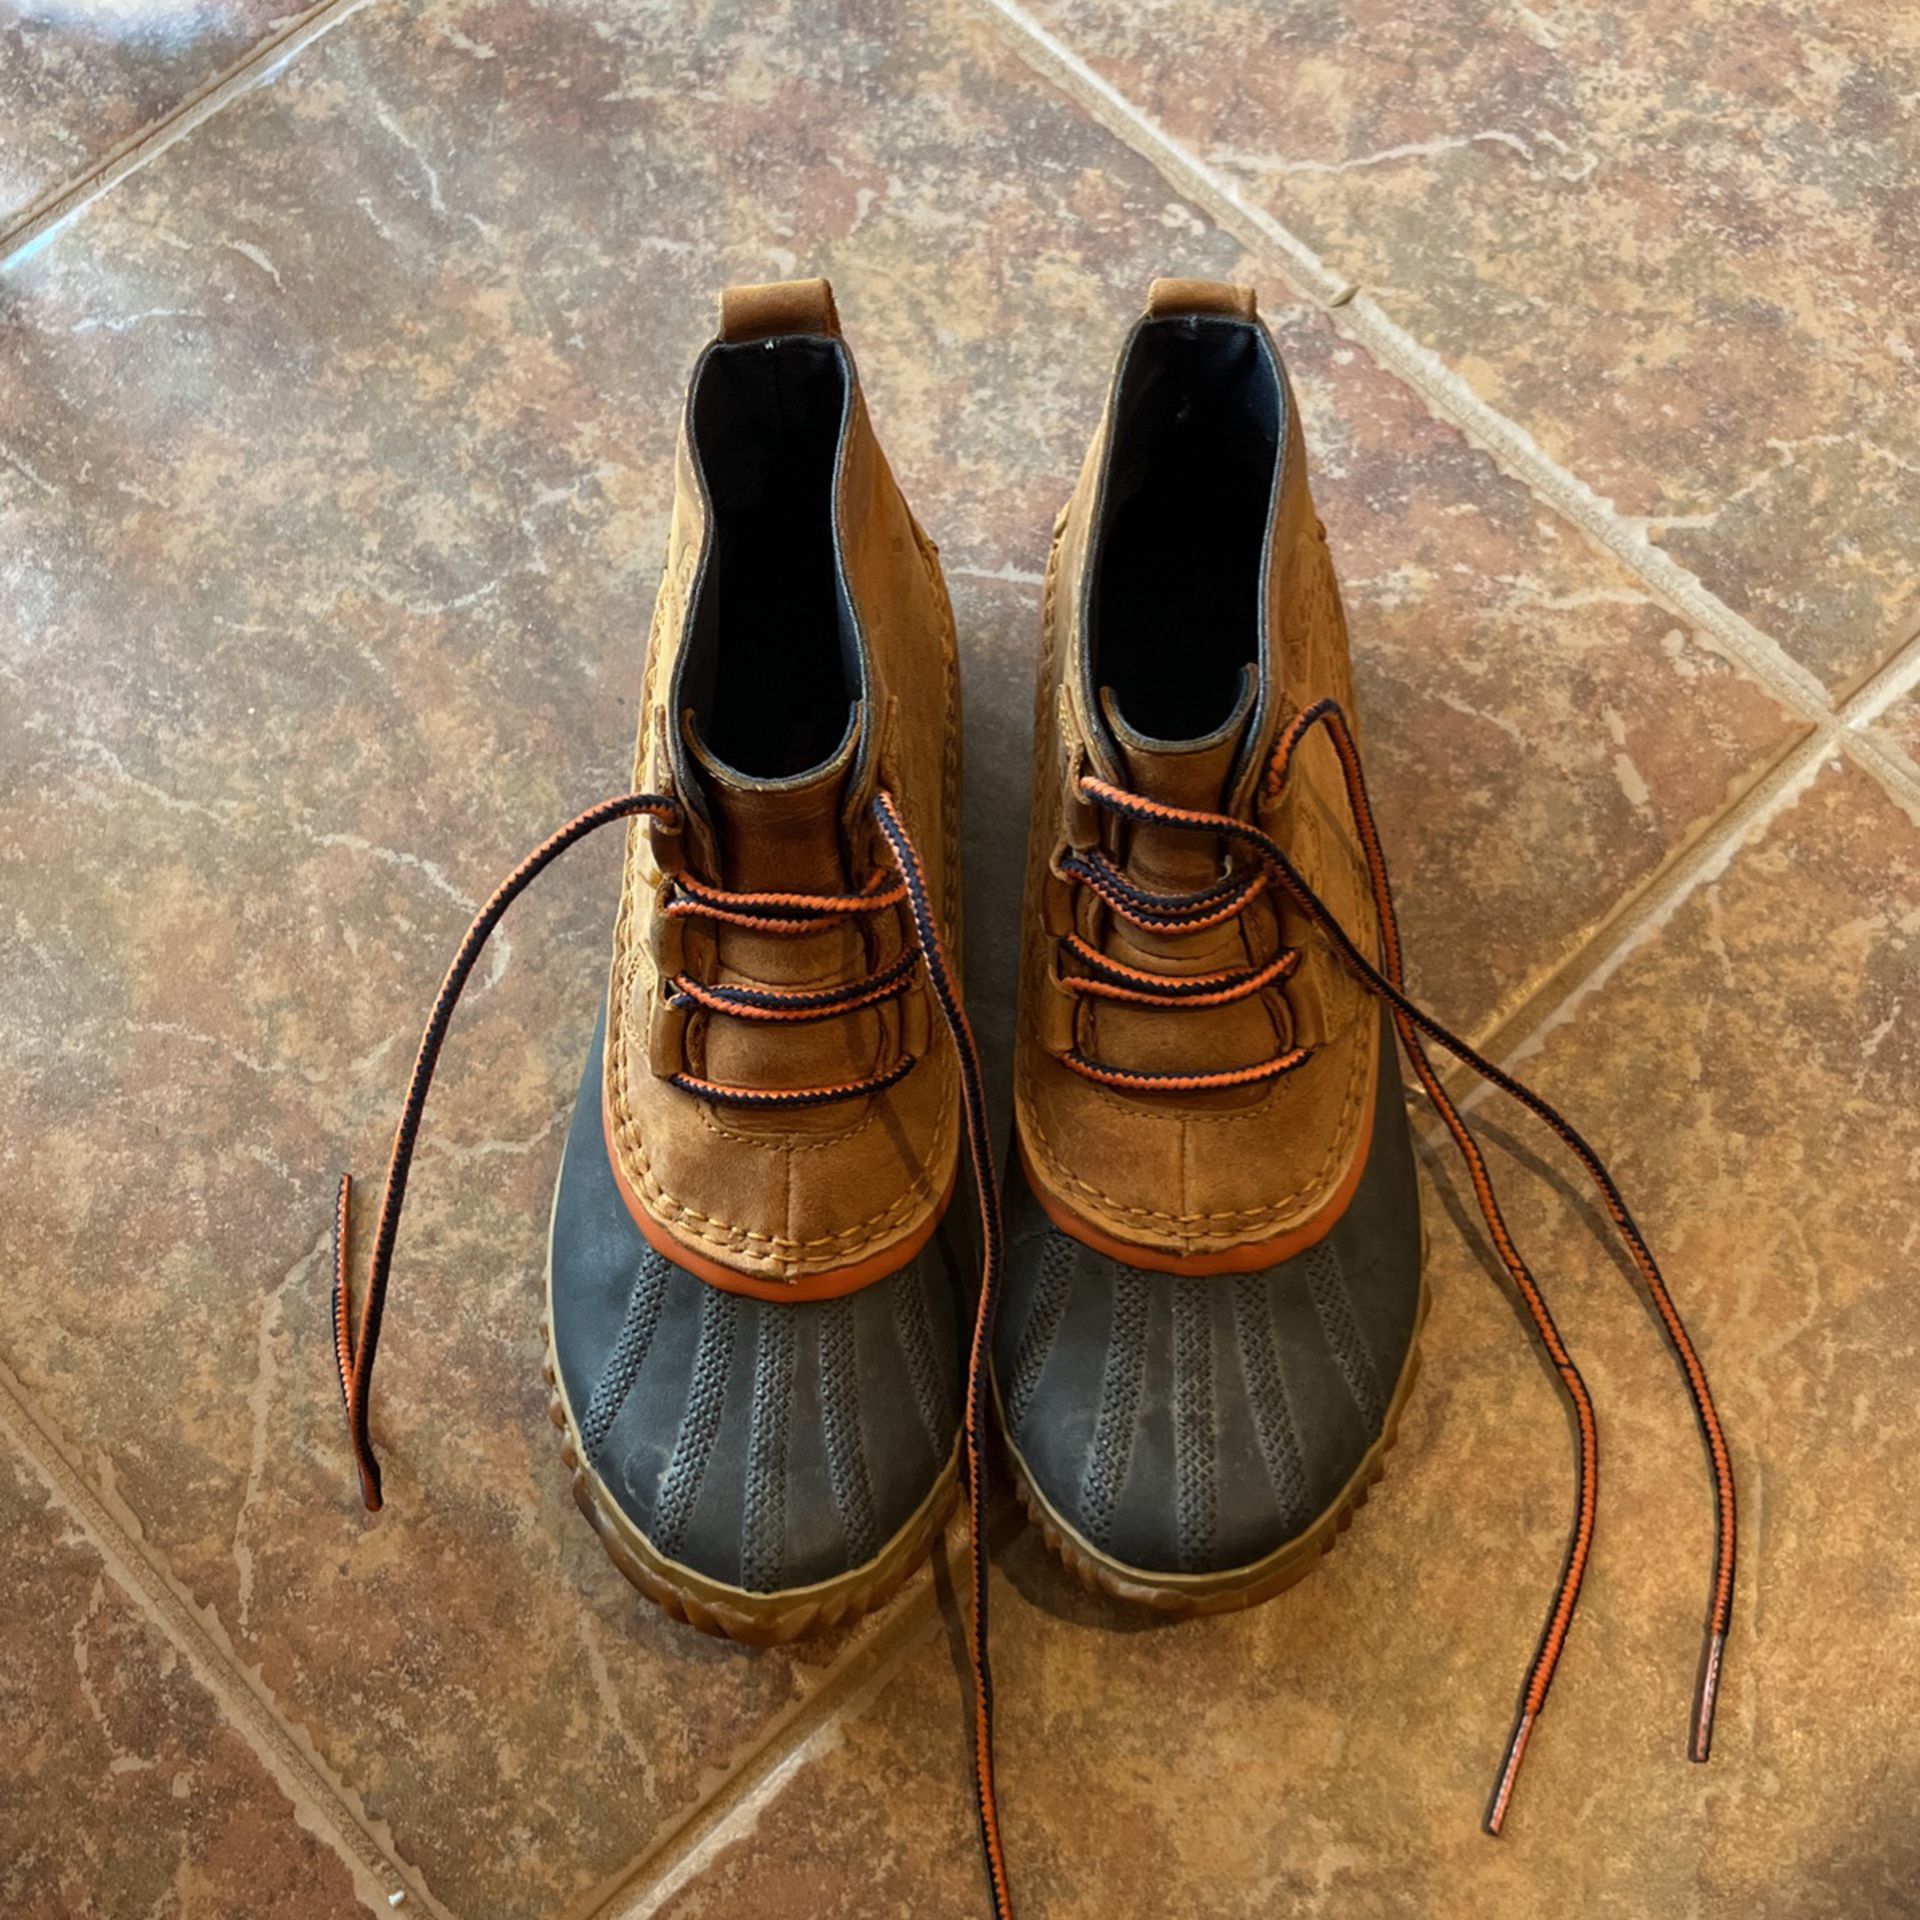 Sorel Duck Boots - W Size 5.5